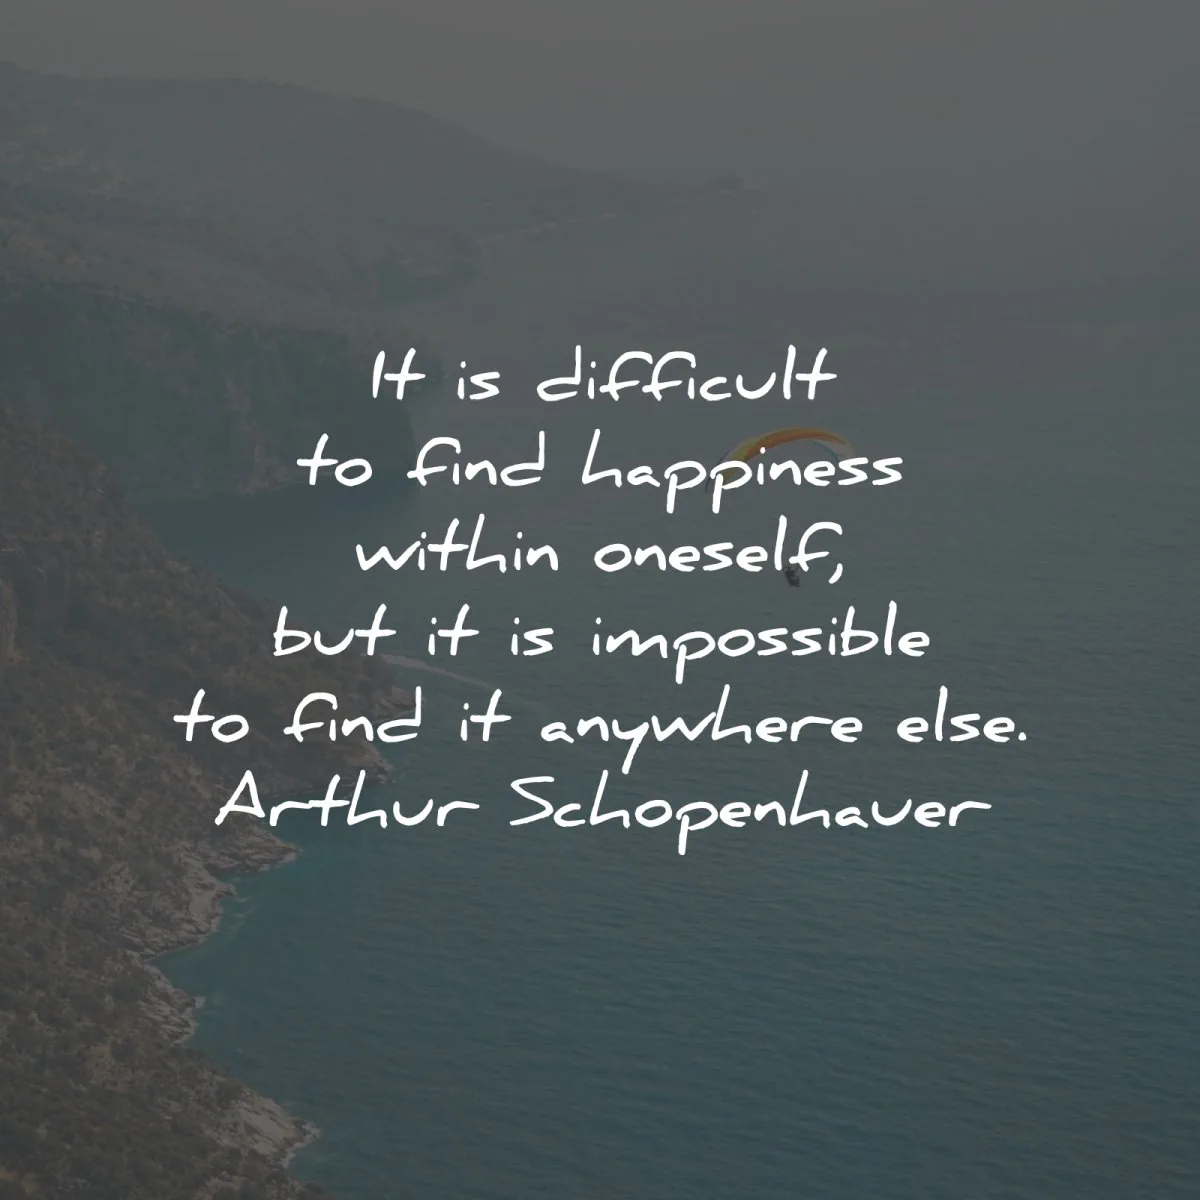 arthur schopenhauer quotes difficult happiness wisdom